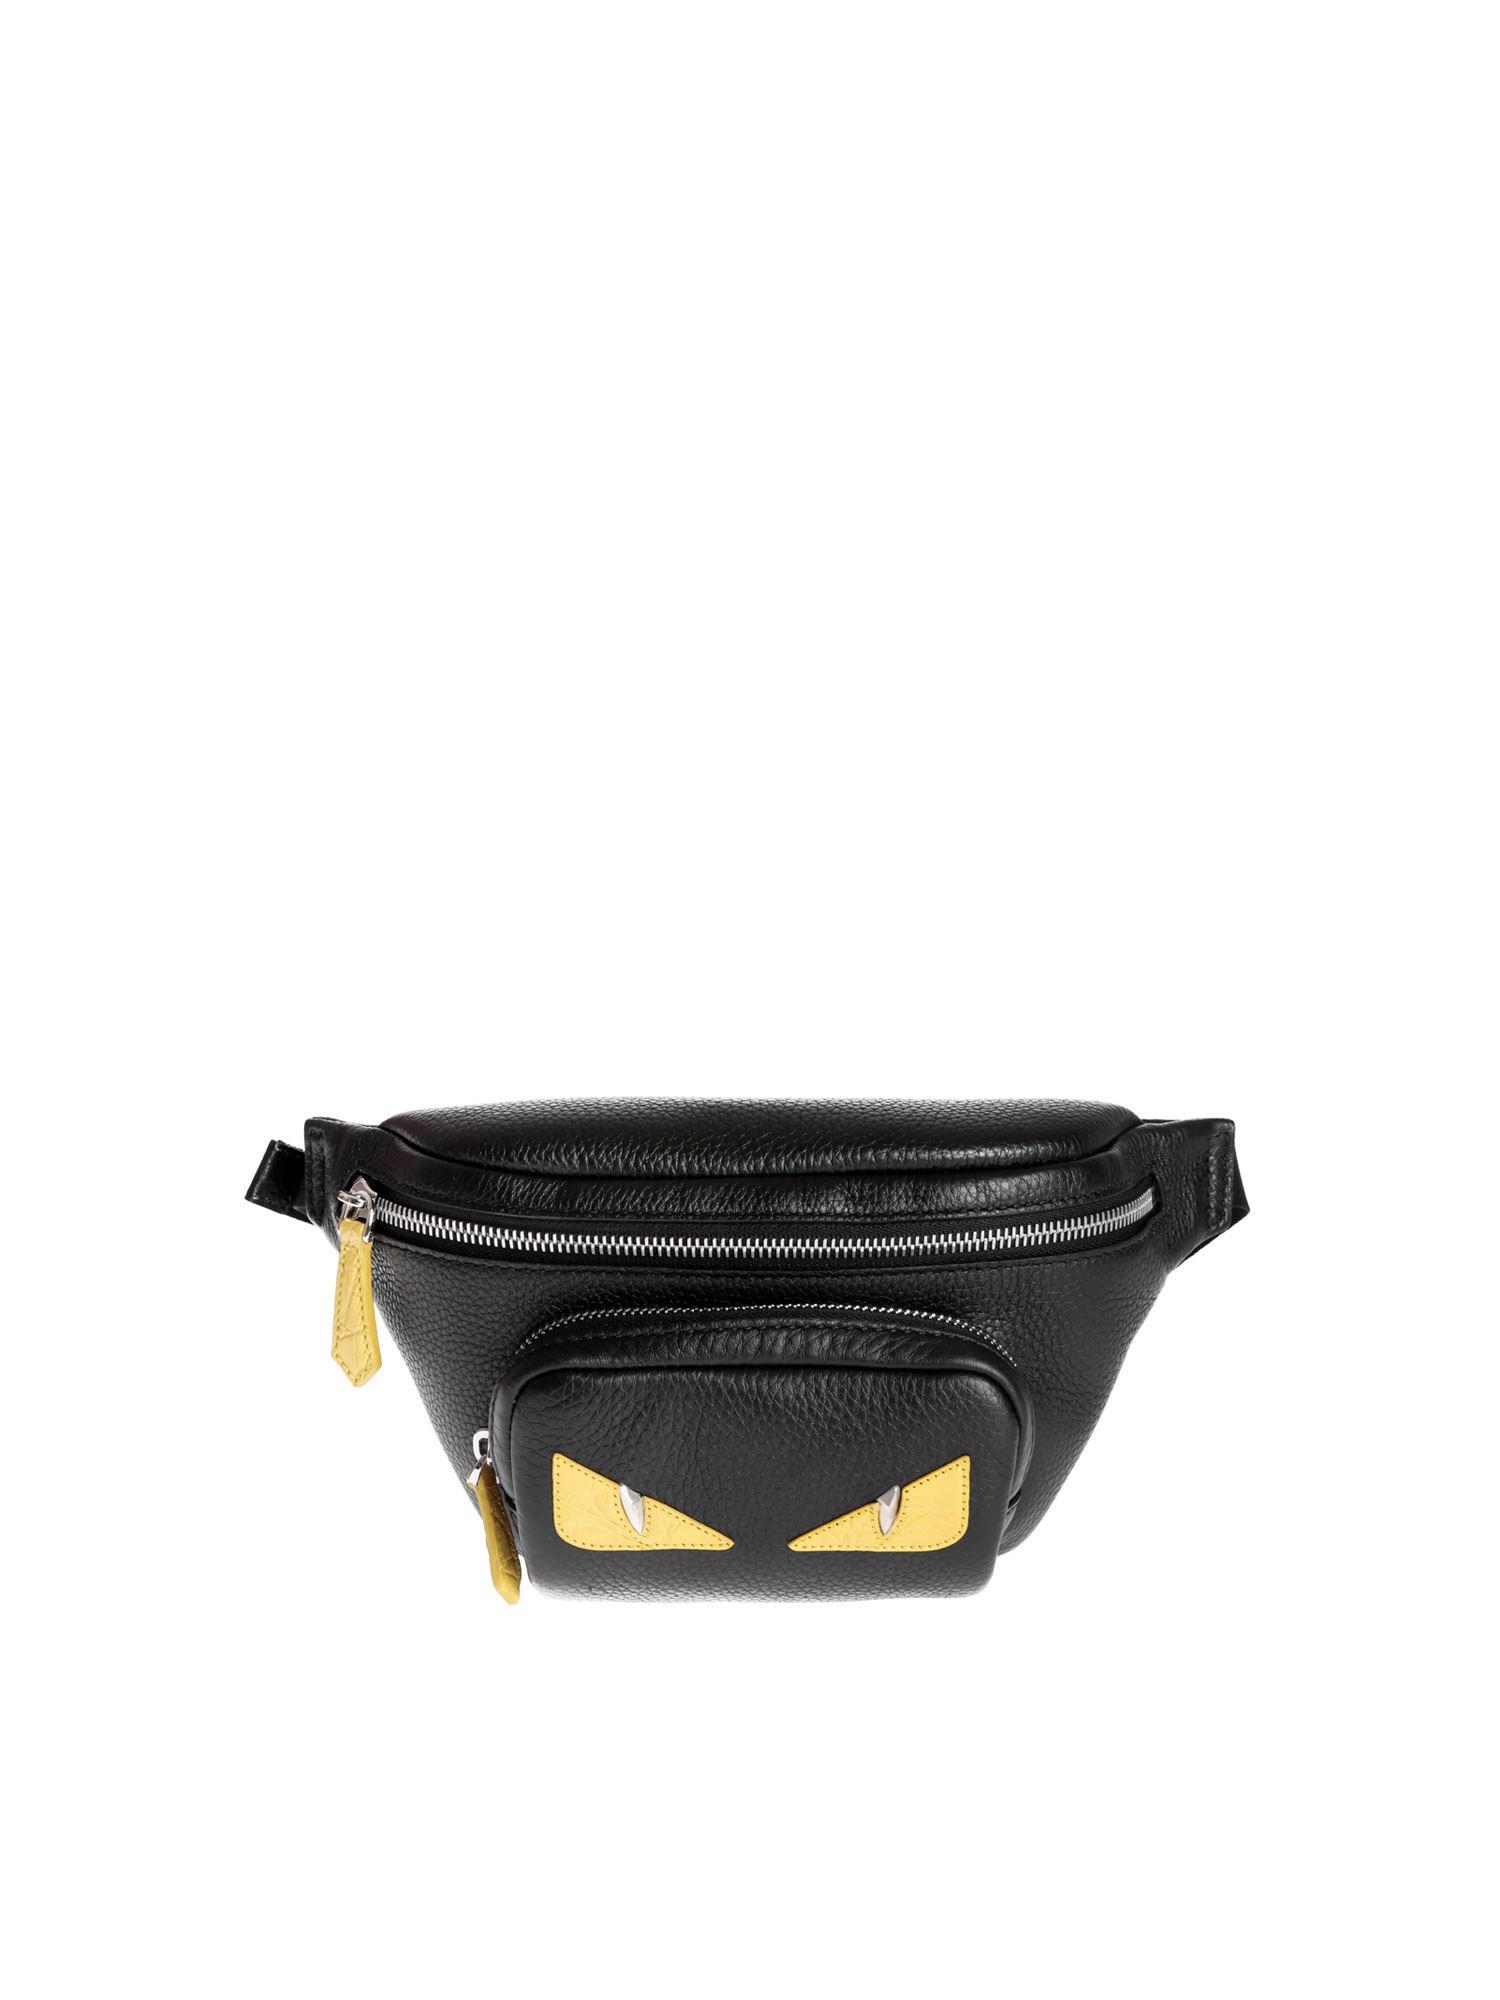 Fendi Leather Yellow Bag Bugs Belt Bag In Black for Men - Lyst